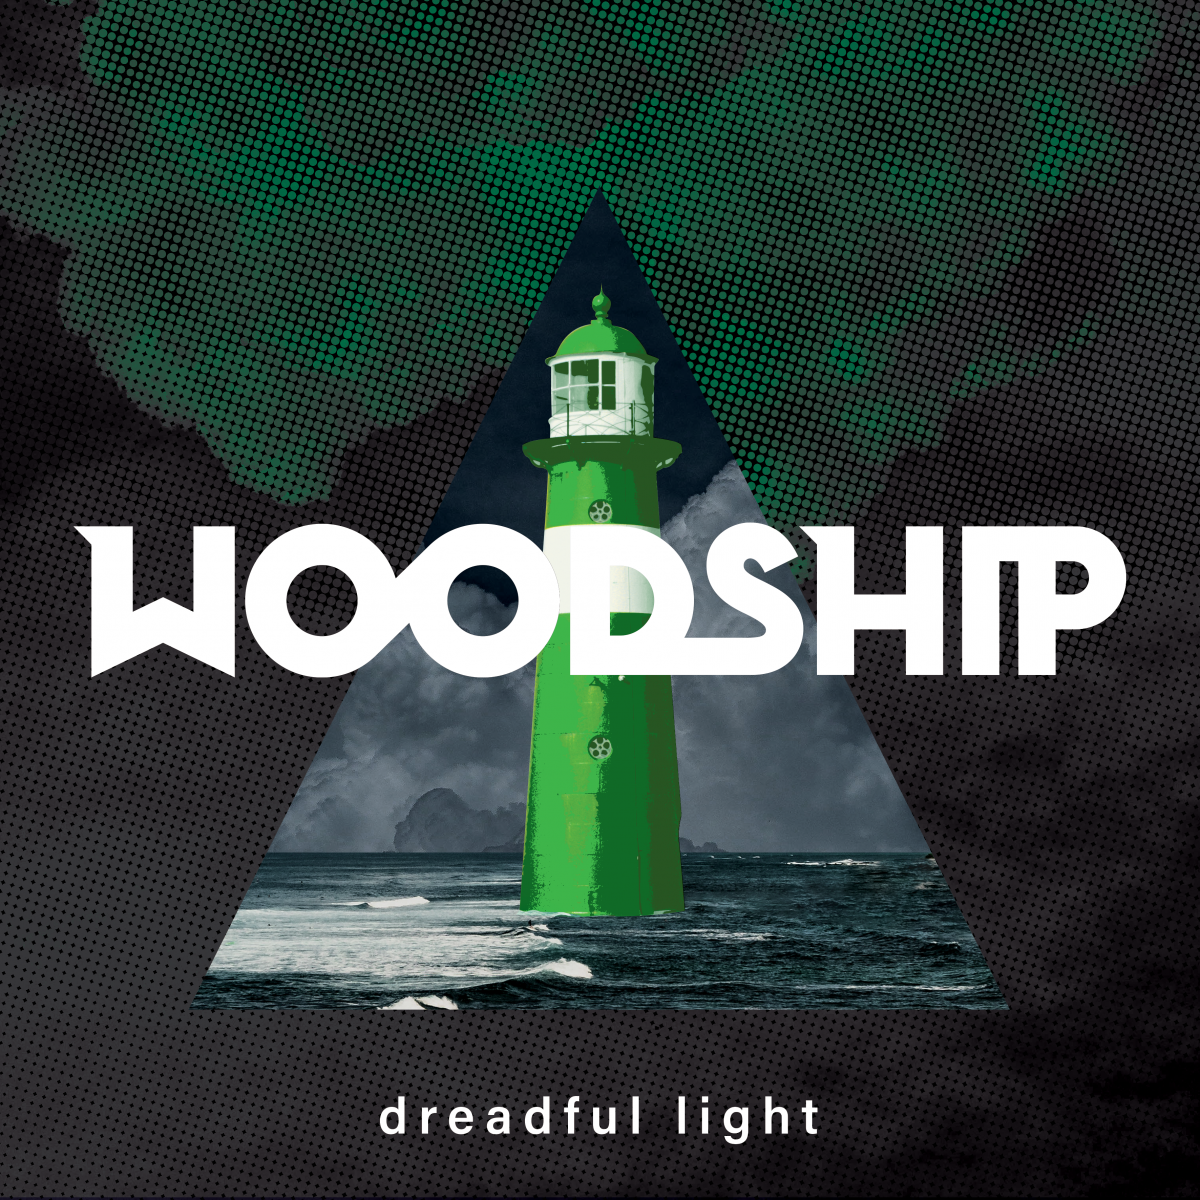 woodship-dreadful-light-video-premiere